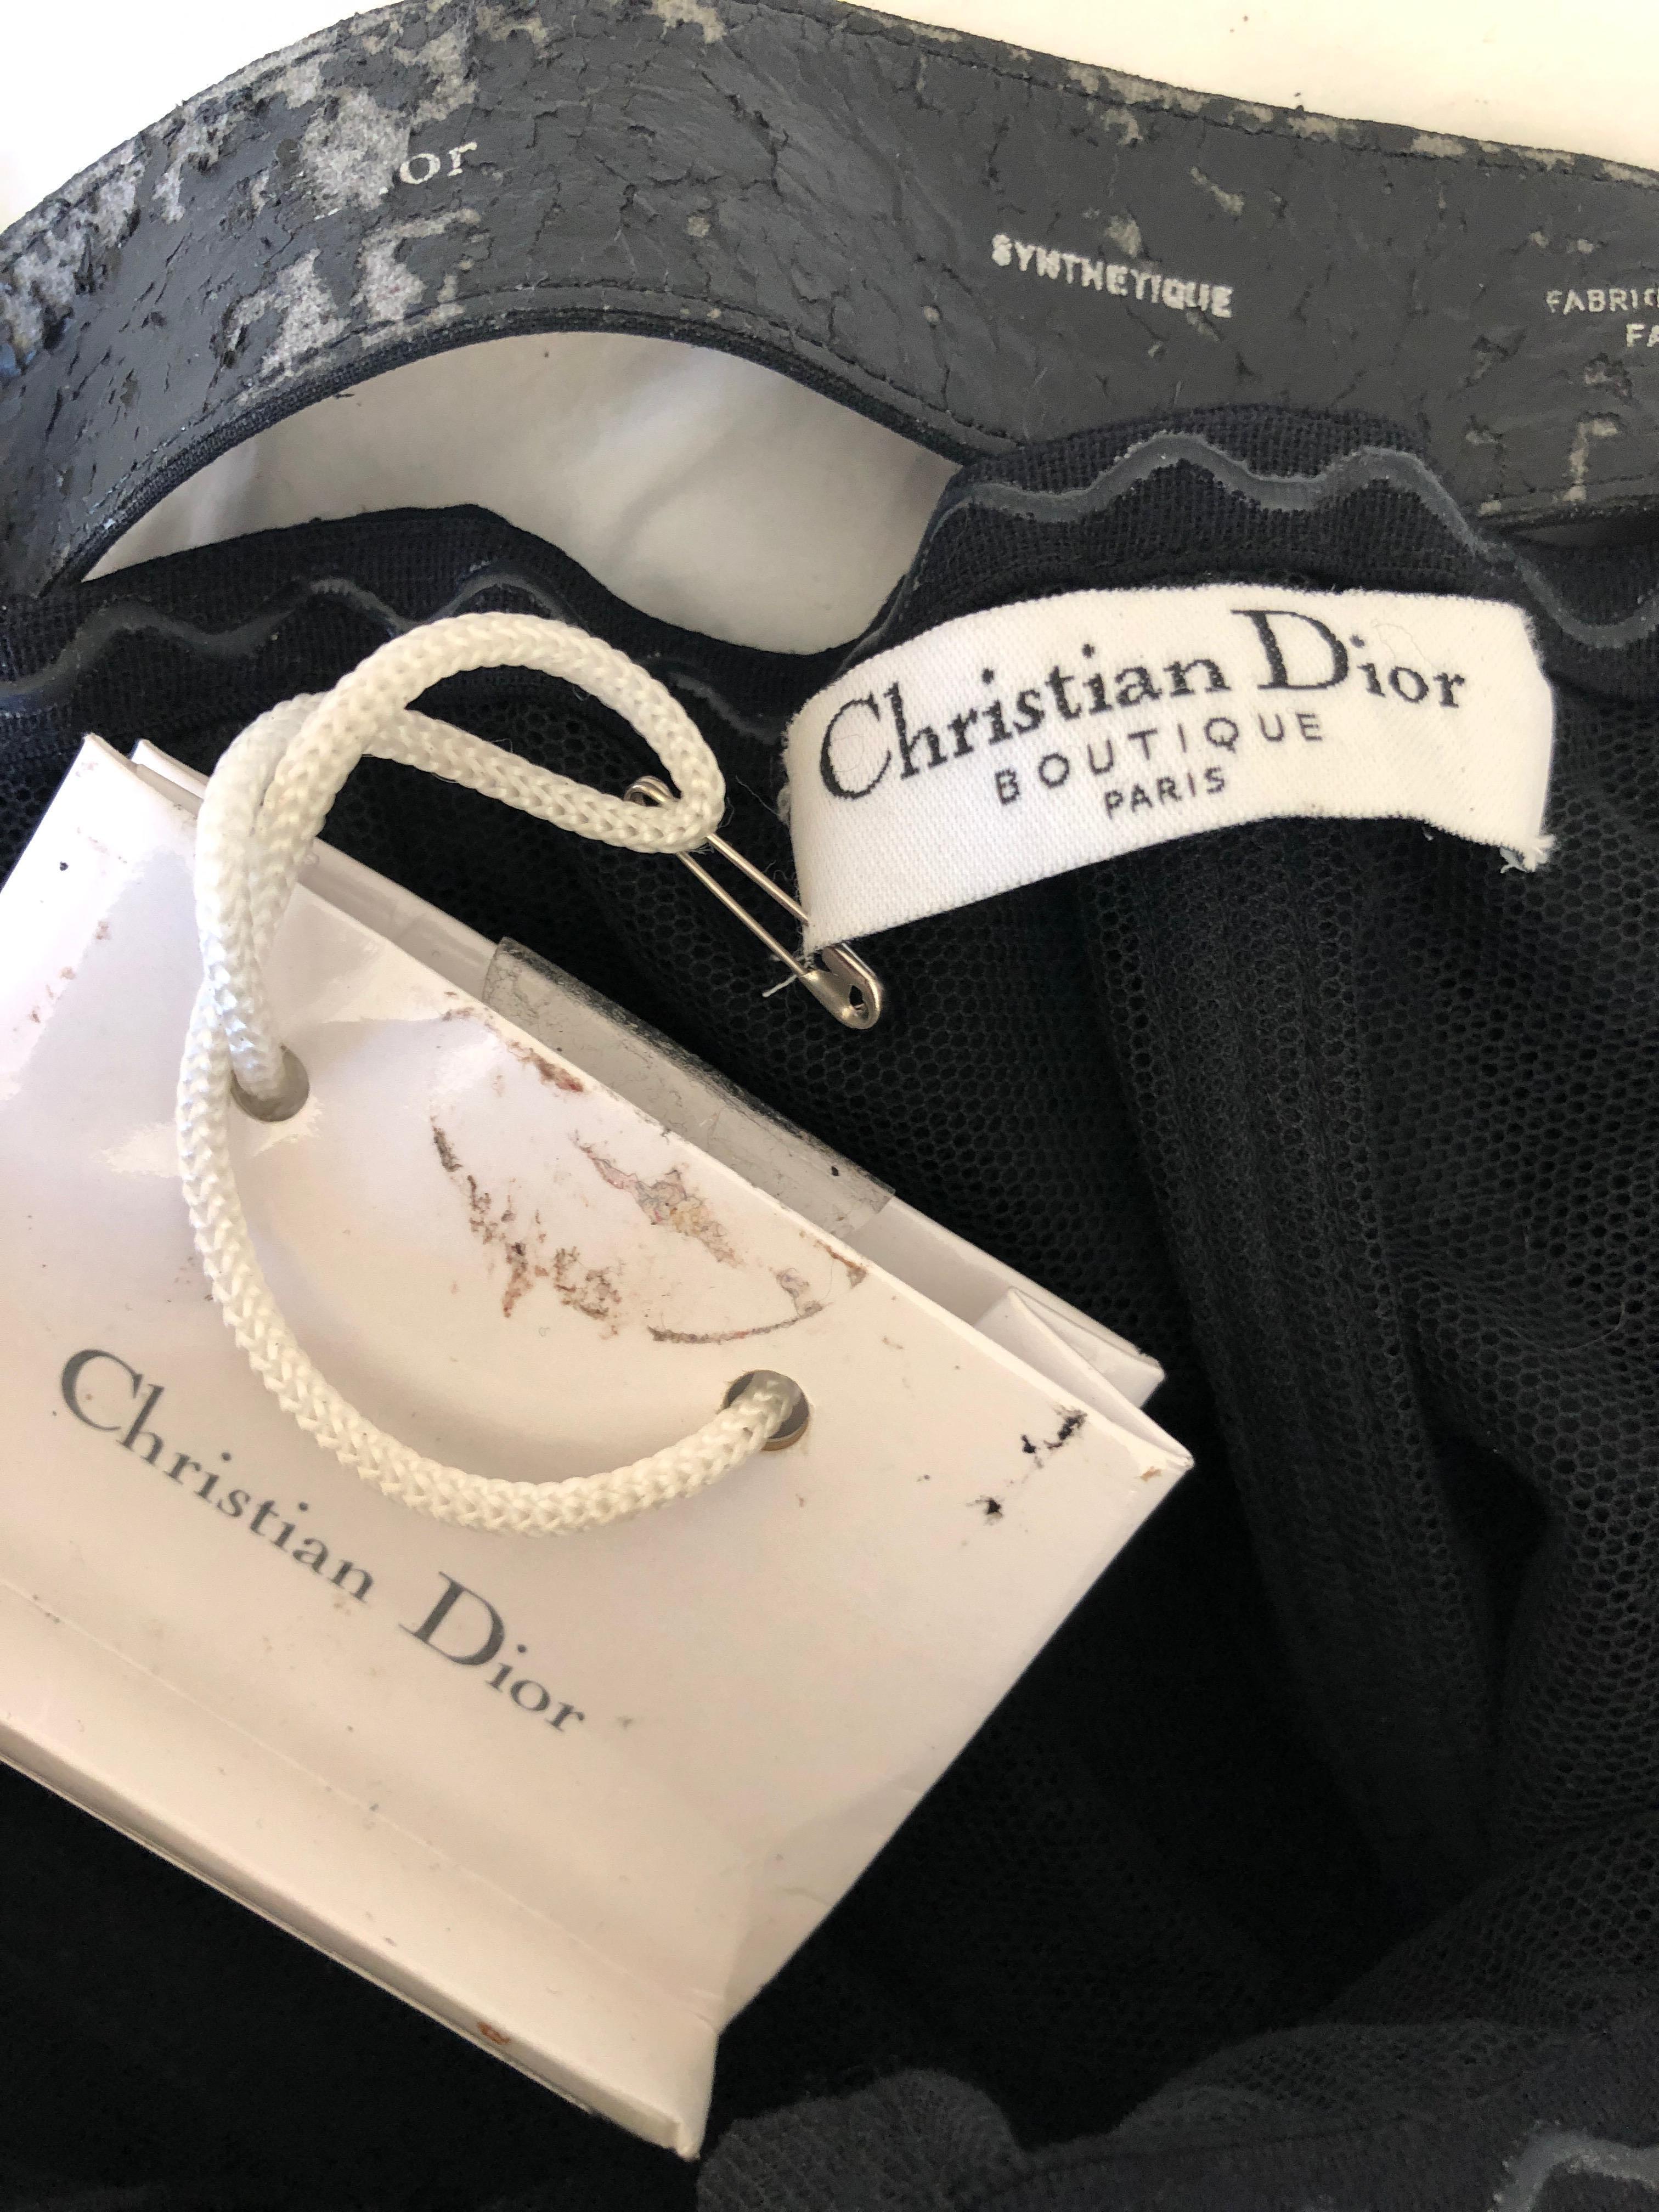  Christian Dior by John Galliano 